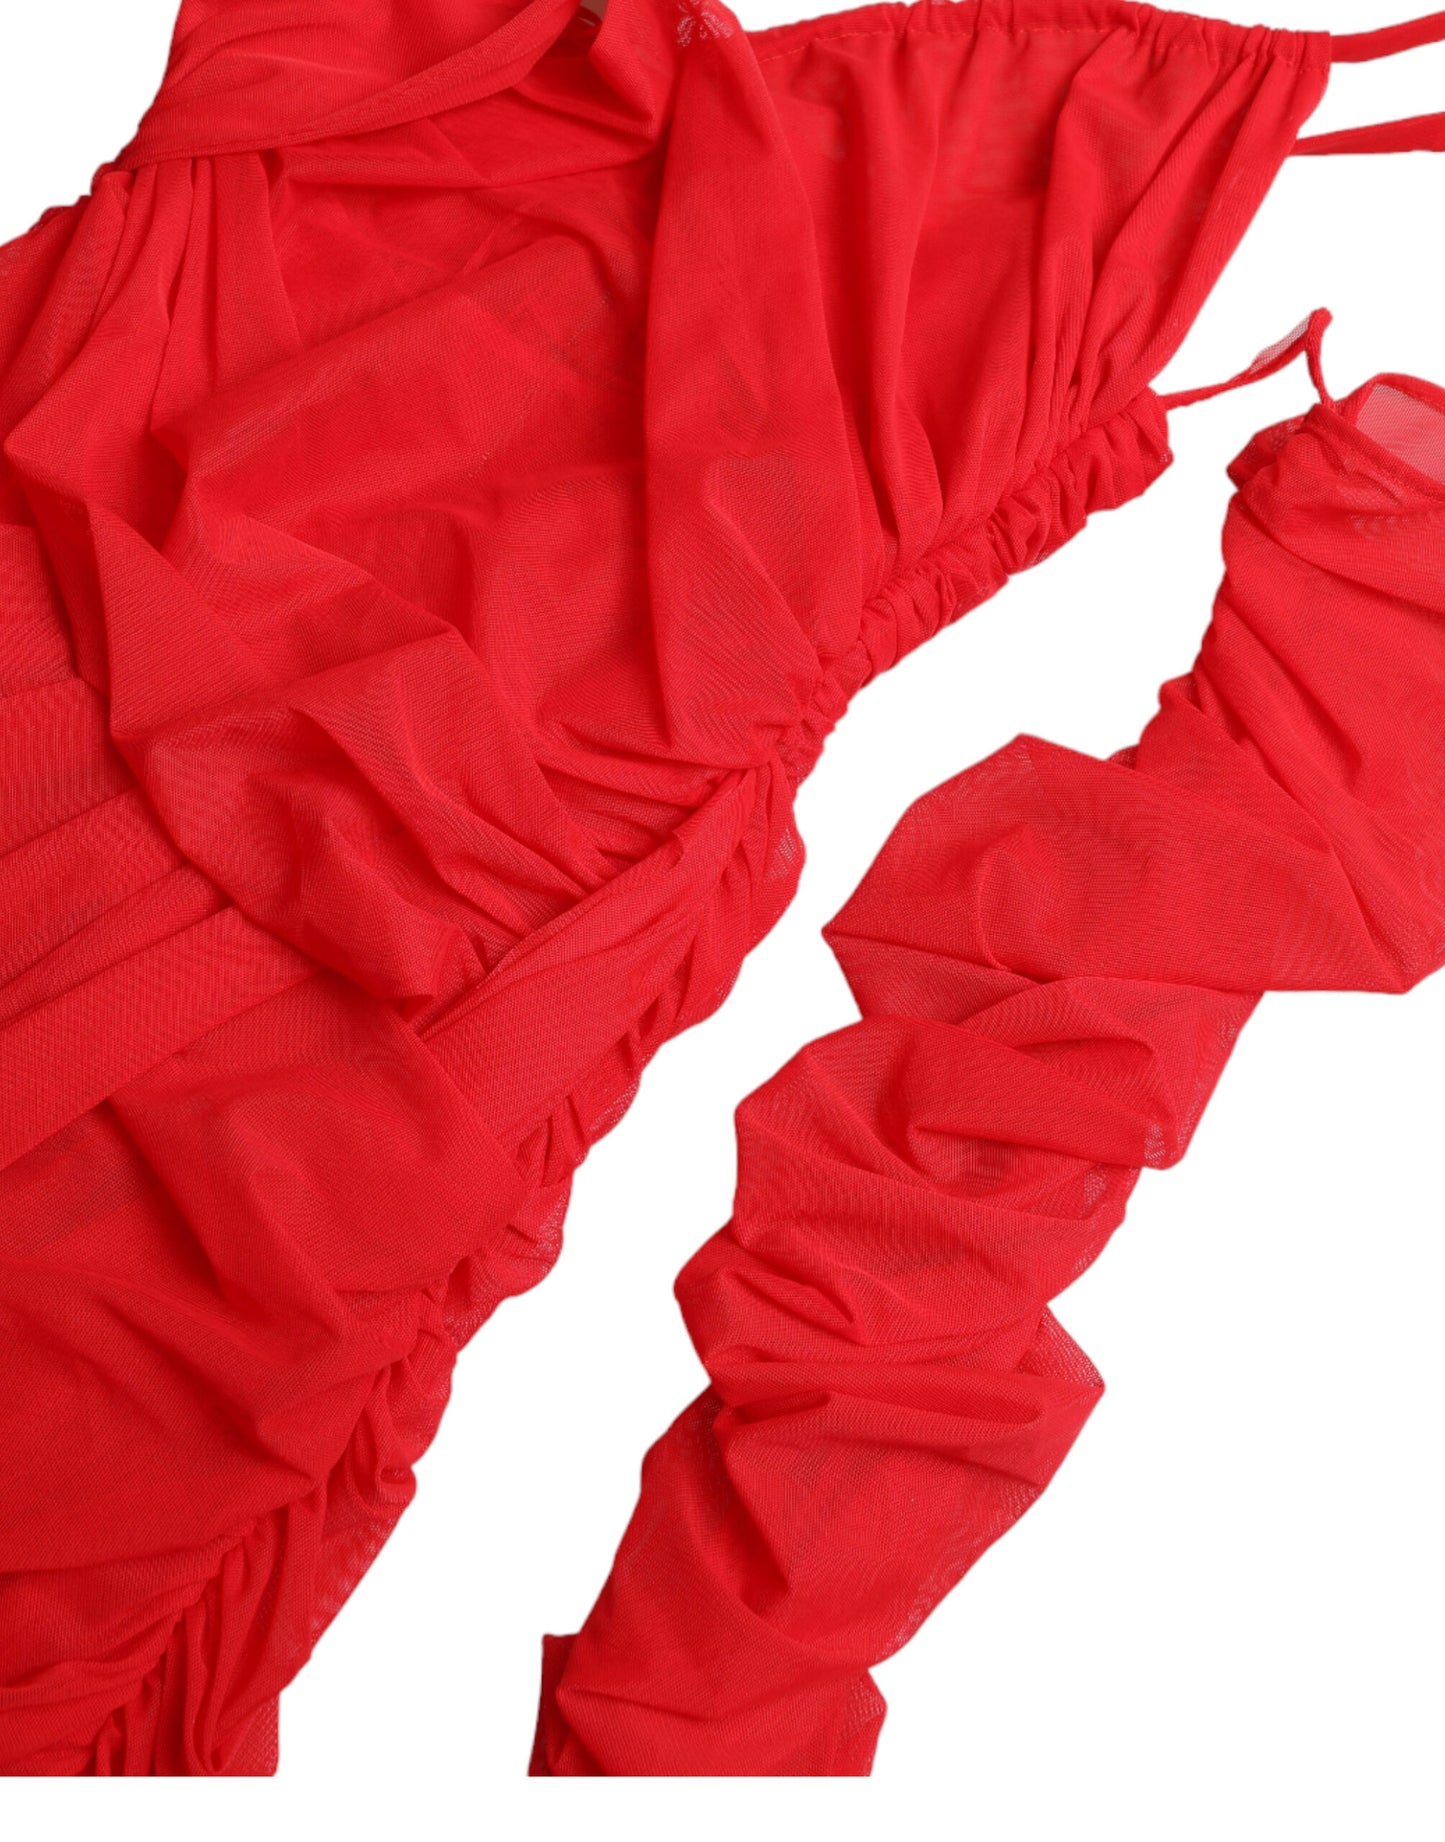 Radiant Red Stretch Satin Midi Dress